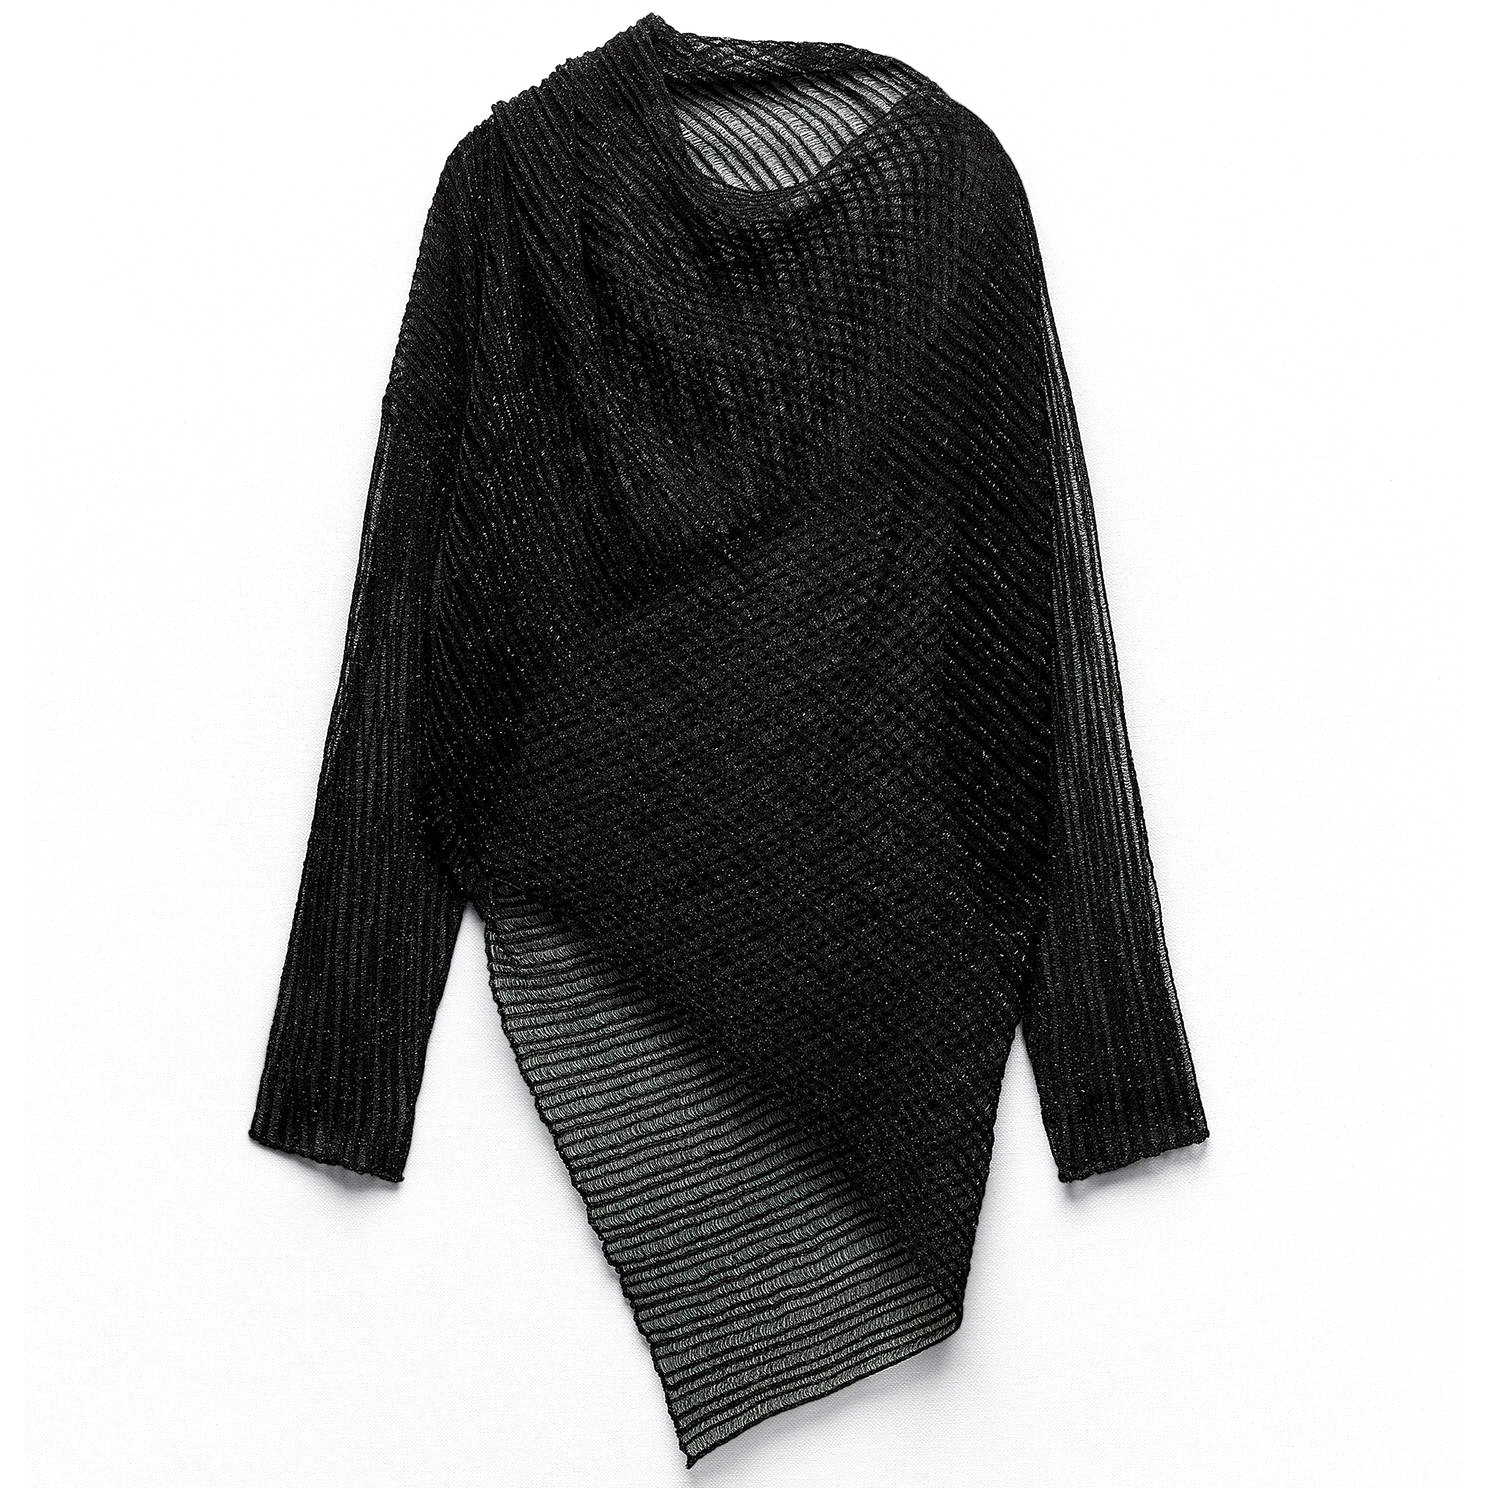 Топ Zara Asymmetric Knit, черный топ zara asymmetric knit черный